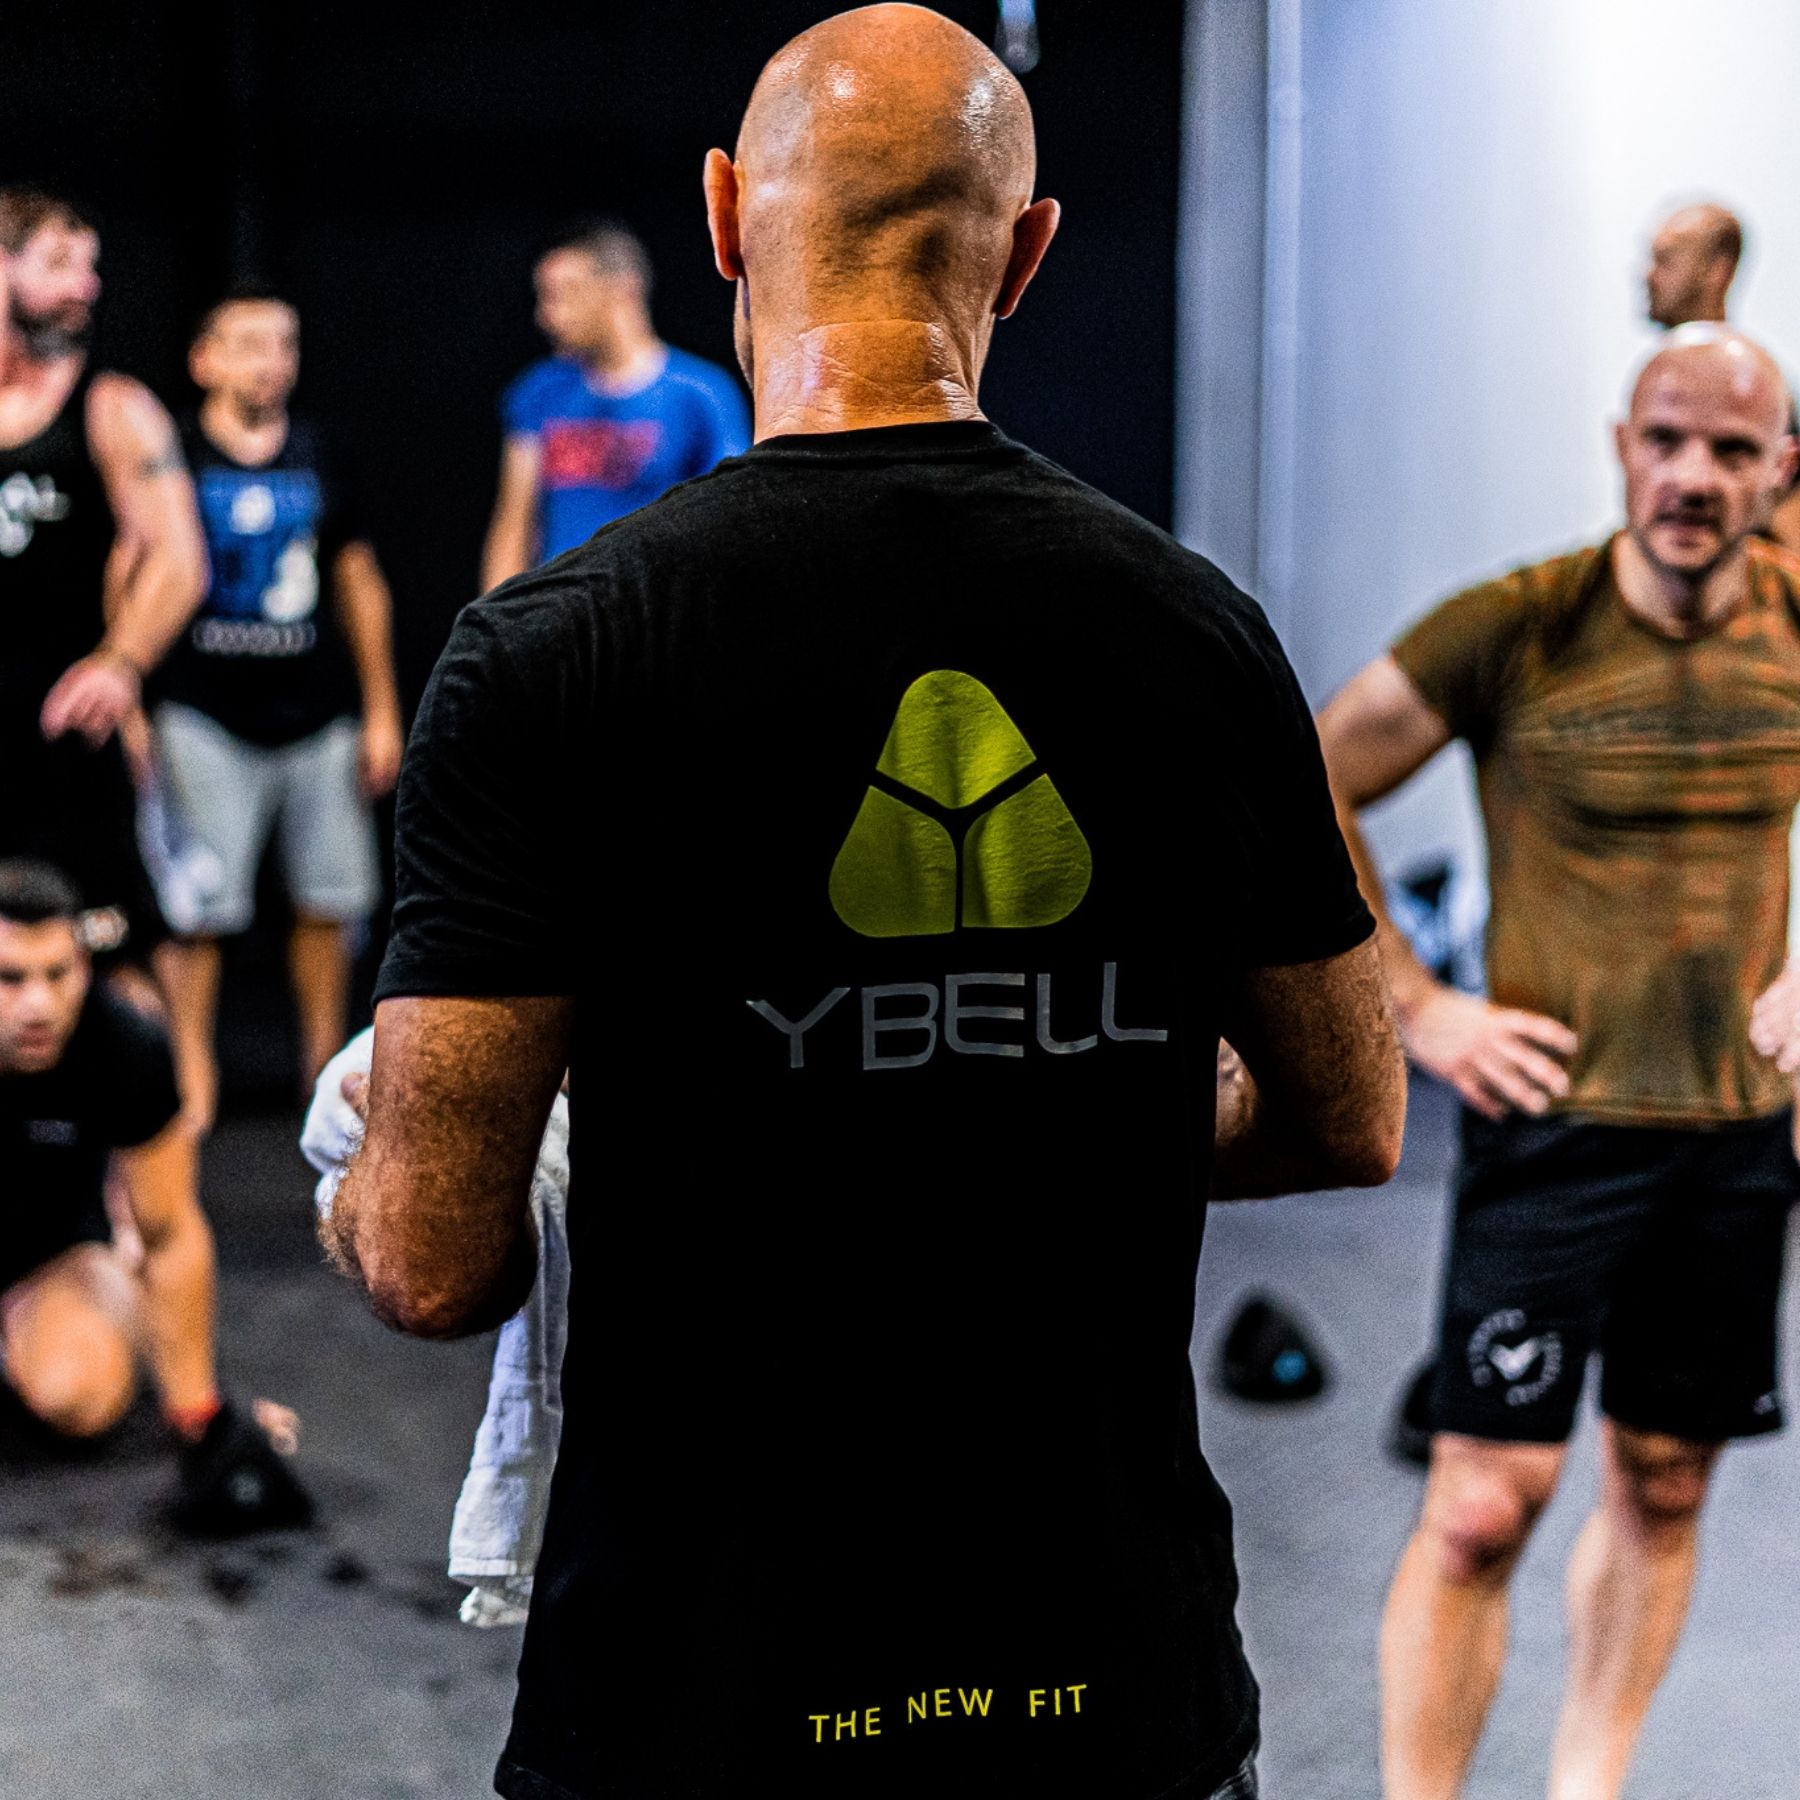 YBell Fitness – Master Instructor Training